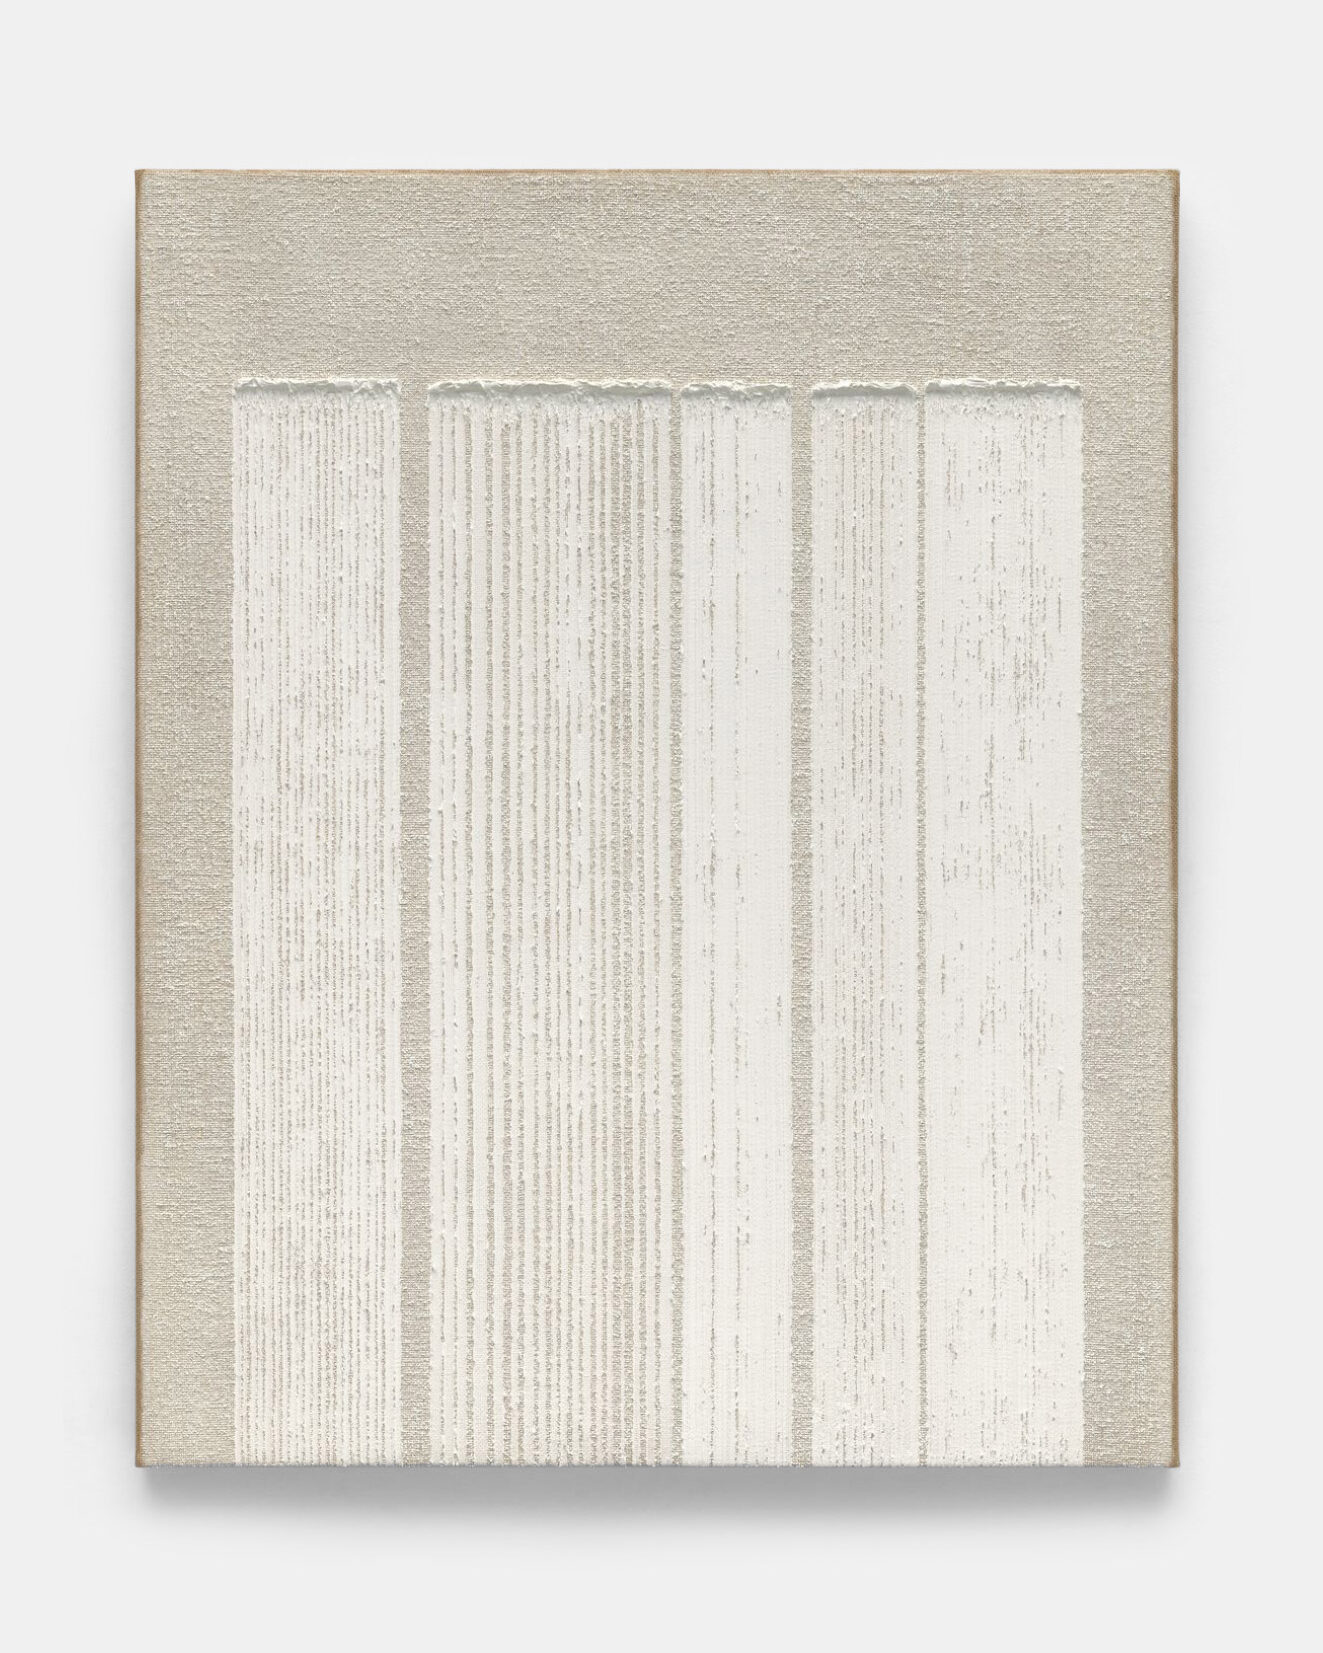 Ha Chong-hyun, Conjunction 22-19, 2022, Oil on hemp cloth, 162 × 130 cm © The Artist, Image Courtesy Almine Rech